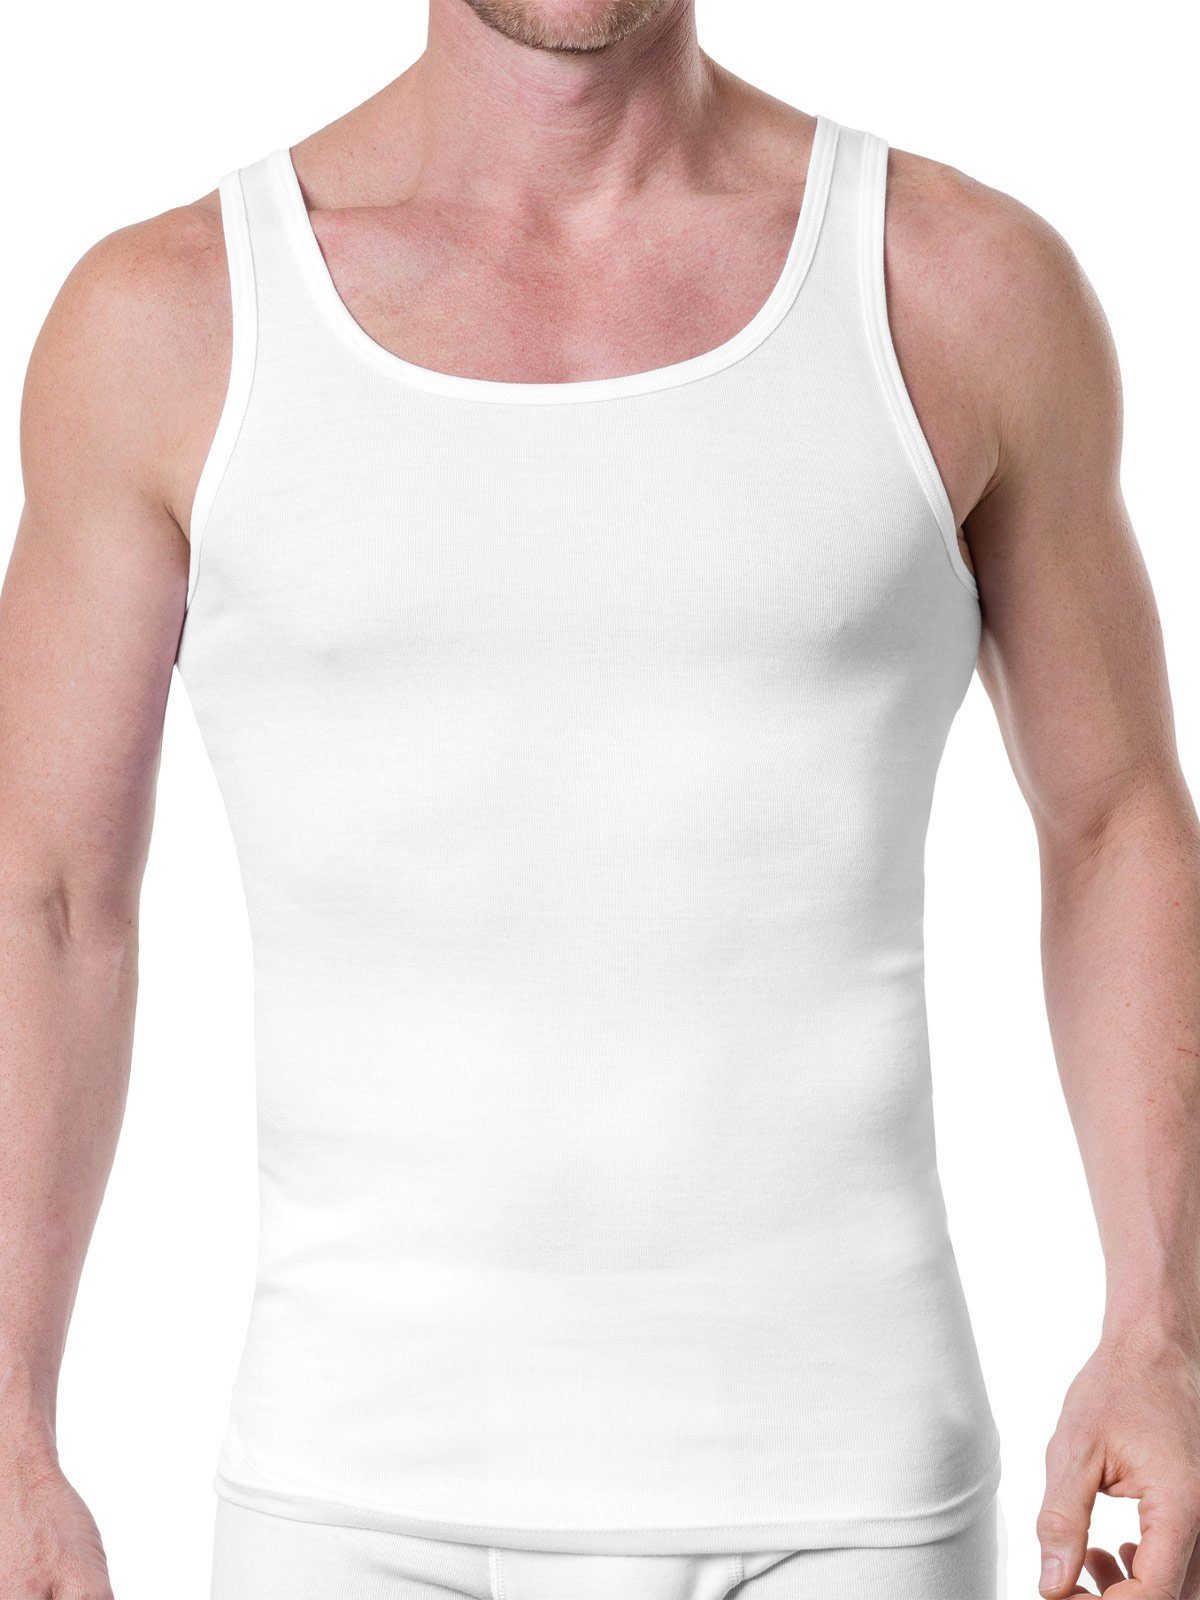 KUMPF Achselhemd Herren Unterhemd 2er Pack Bio Cotton (Packung, 2-St) -